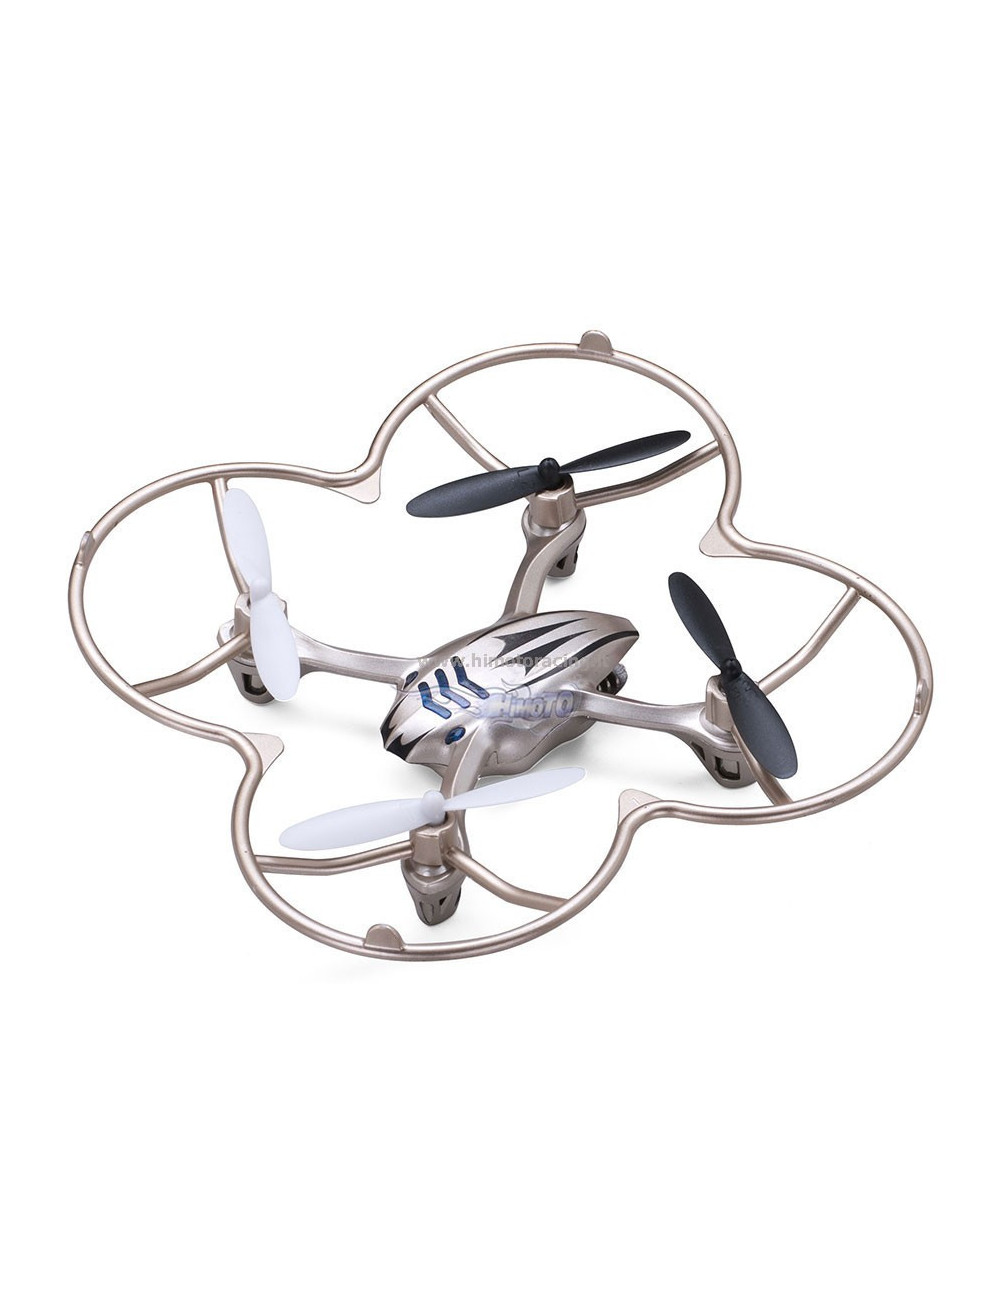 Drone Mini Spider Gold Himoto 2.4ghz 3D